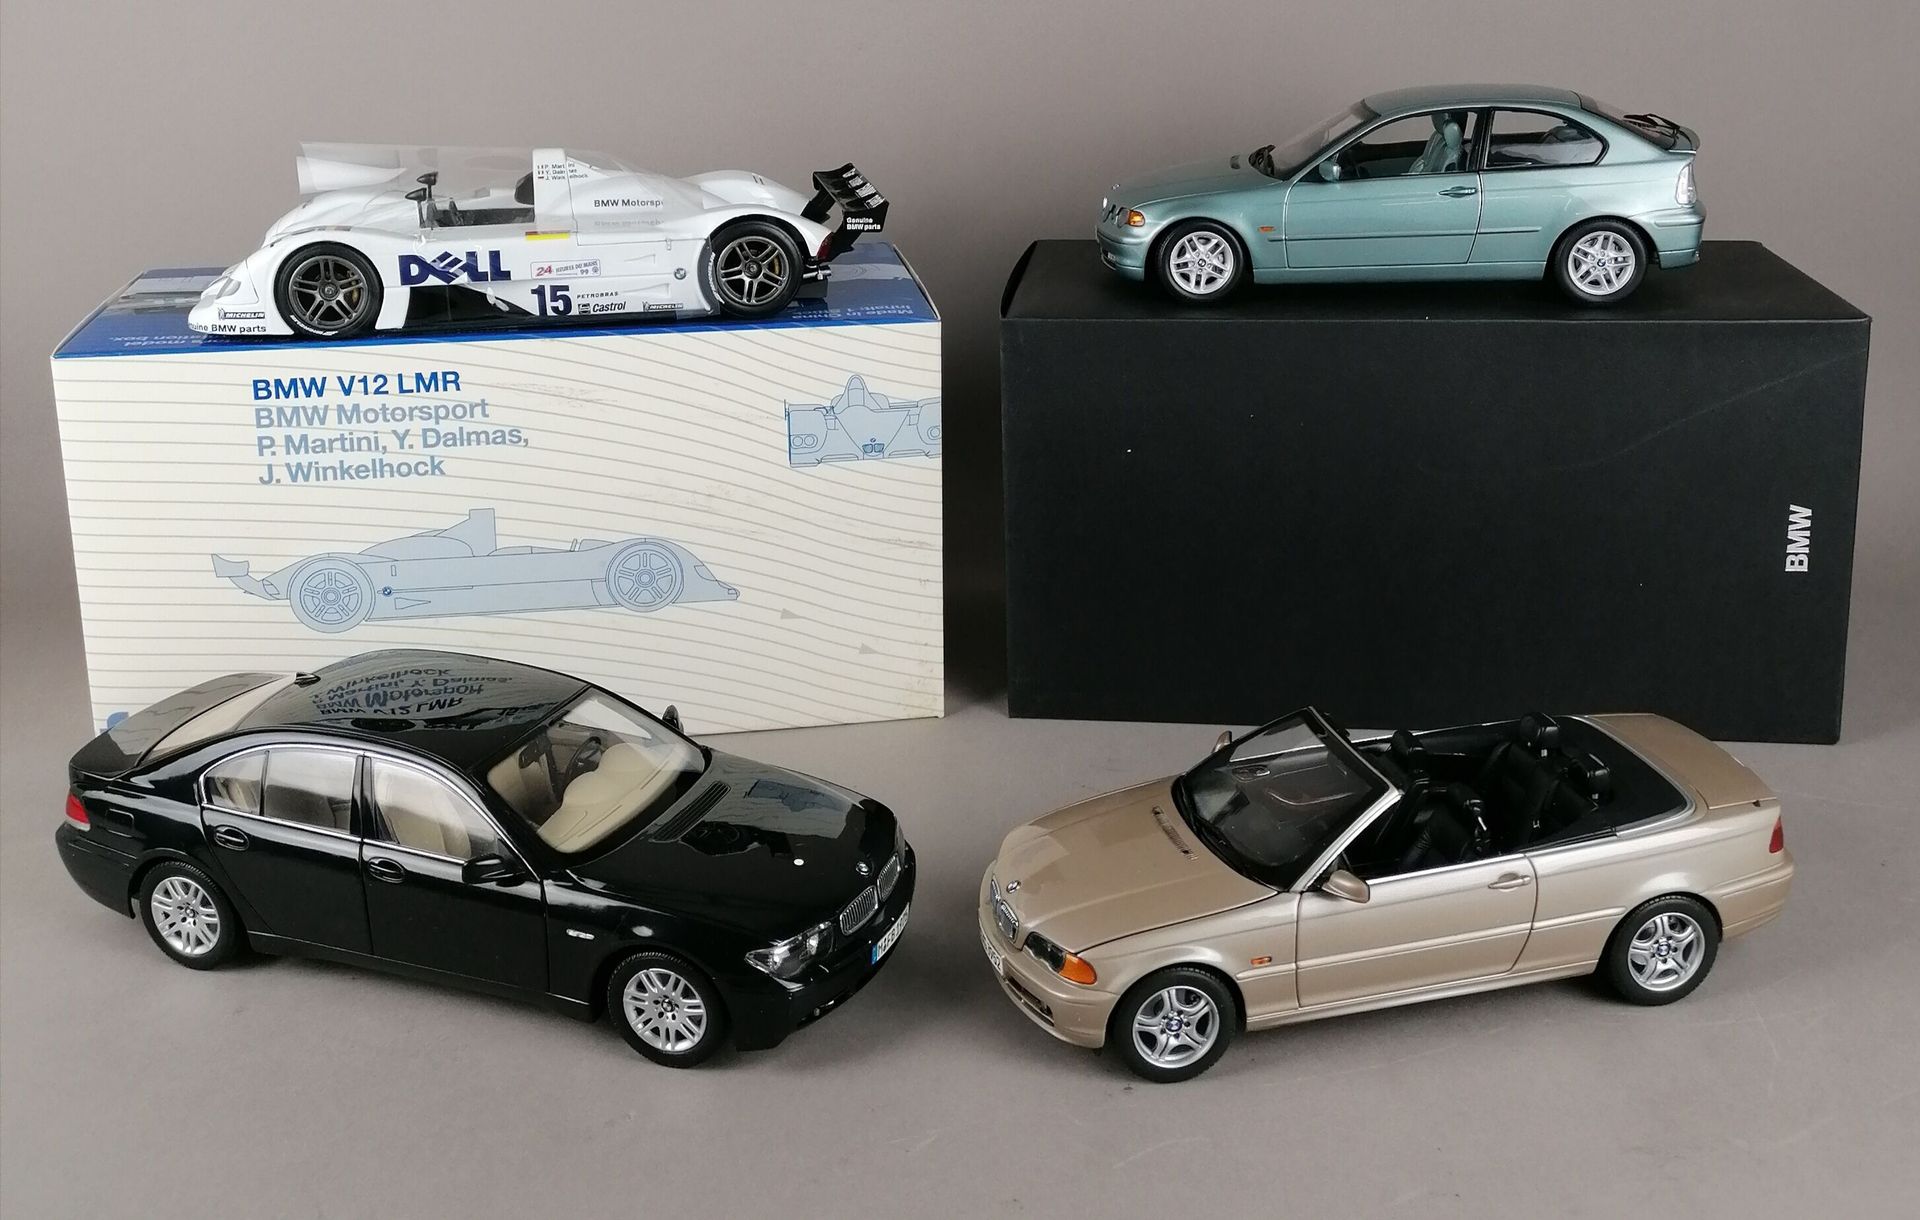 Null BMW - FOUR BMW 1/18 scale :

1x V12 LMR

1x 7Series

1x 325Ti Compact

1x 3&hellip;